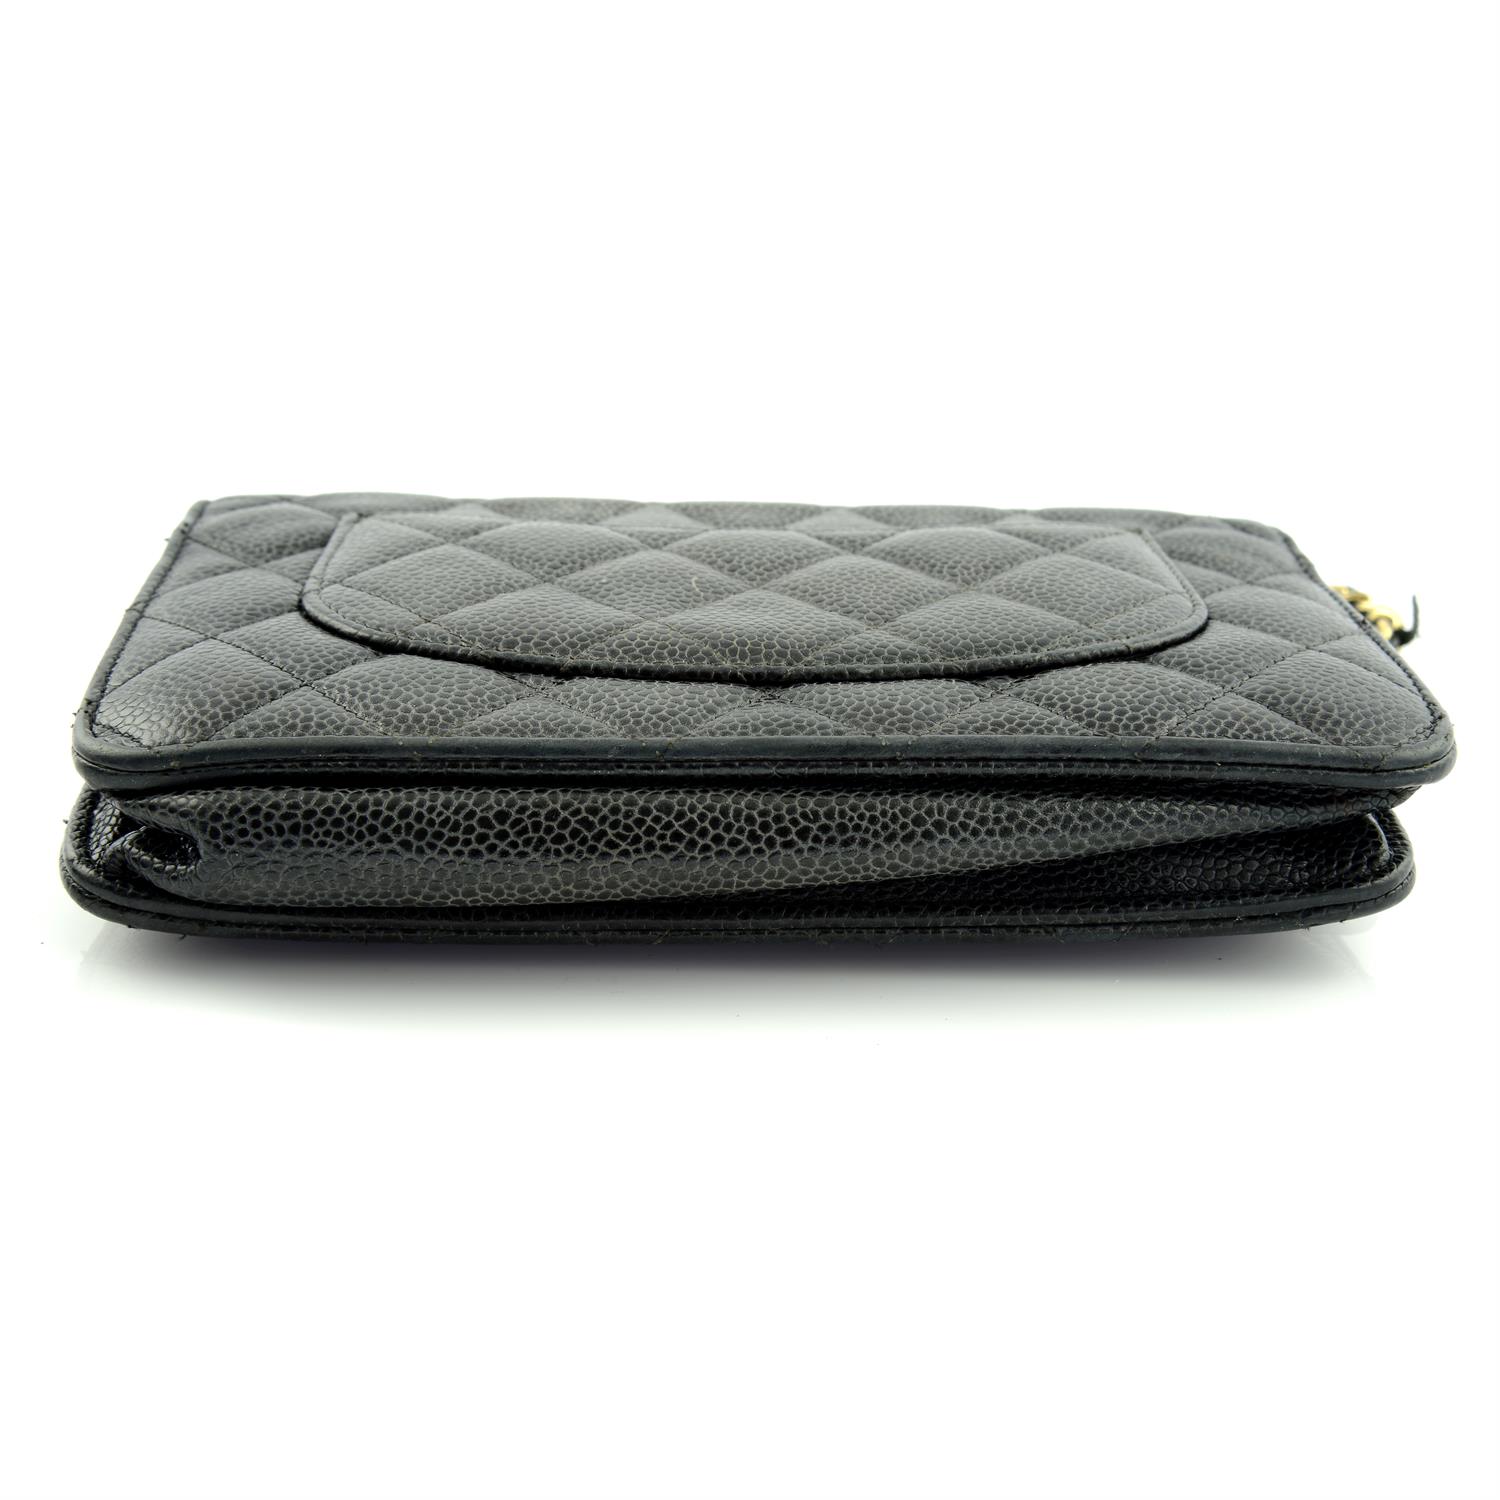 CHANEL - a black Caviar wallet on chain handbag. - Image 4 of 6